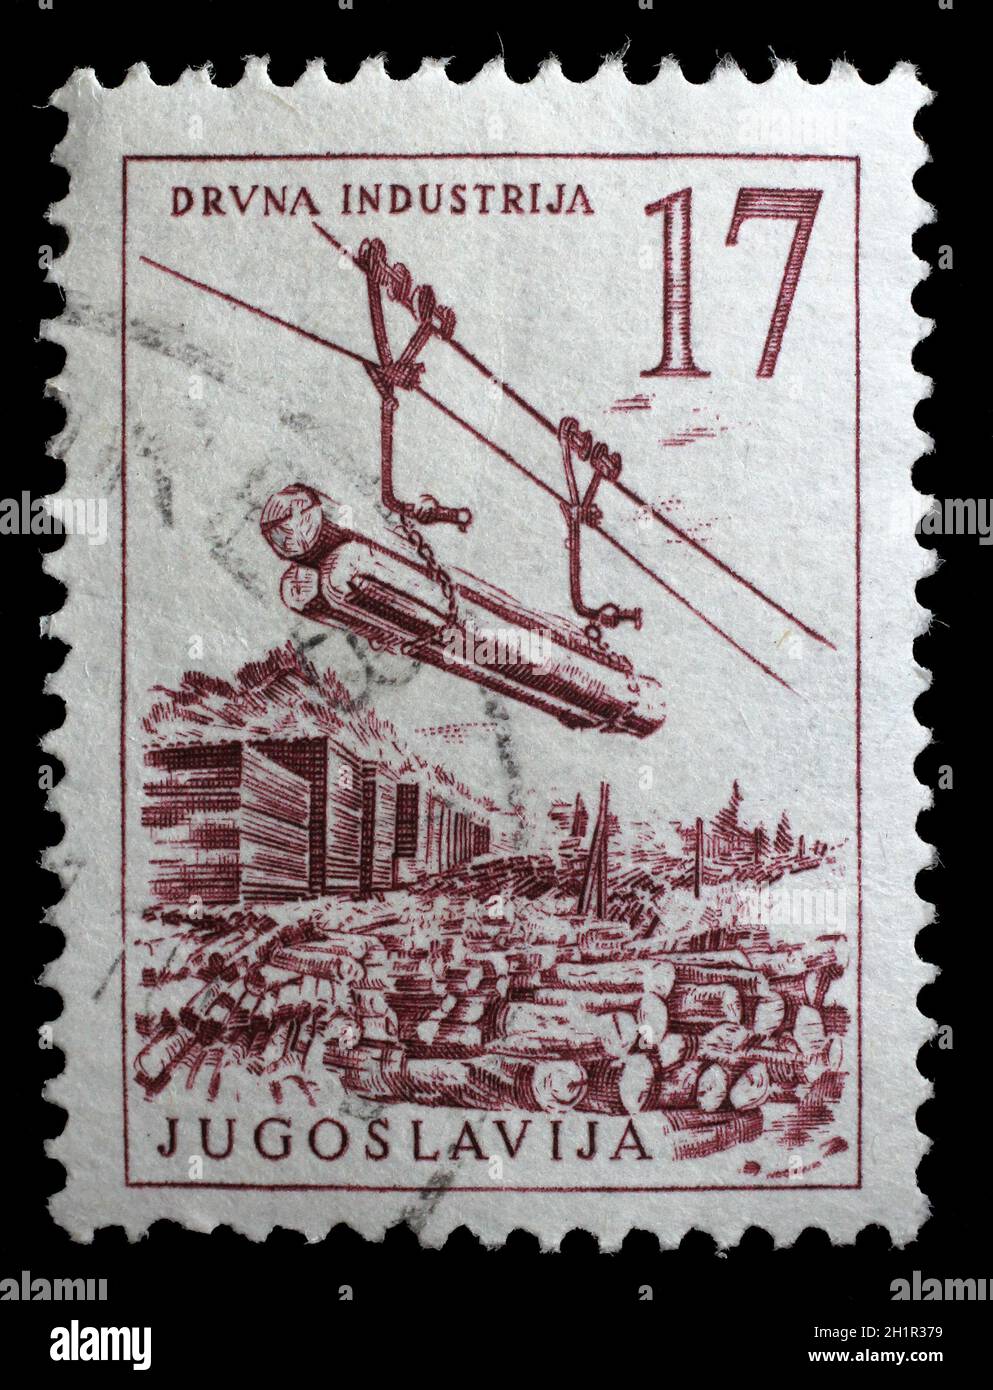 Stamp printed in Yugoslavia shows lumber industry, circa 1958 Stock Photo